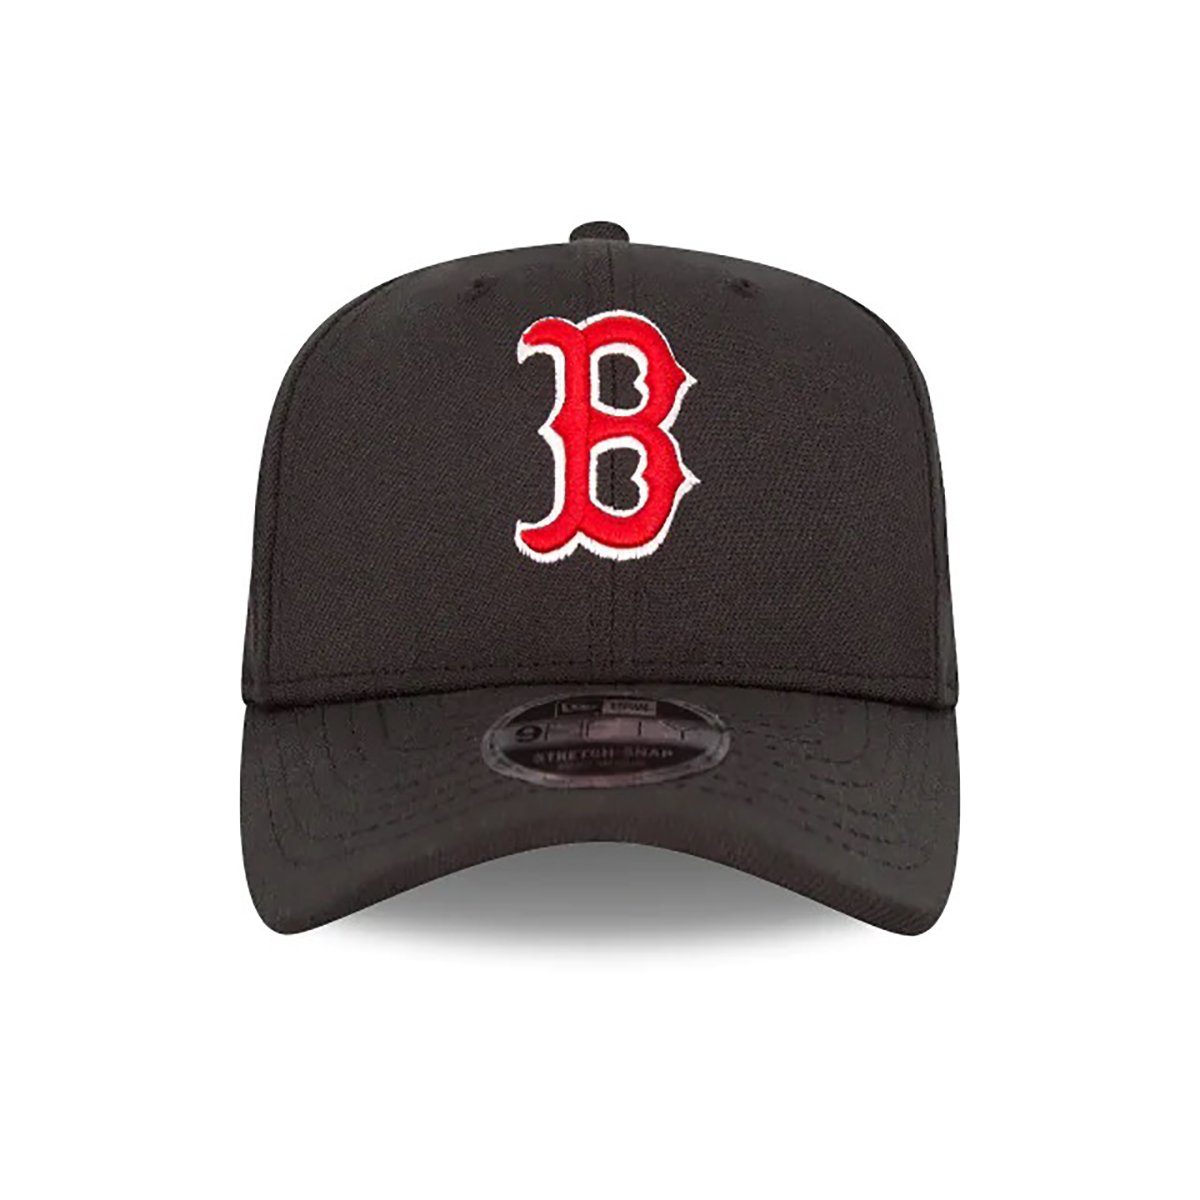 New 9FIFTY Baseball Era Cap Boston Sox Red